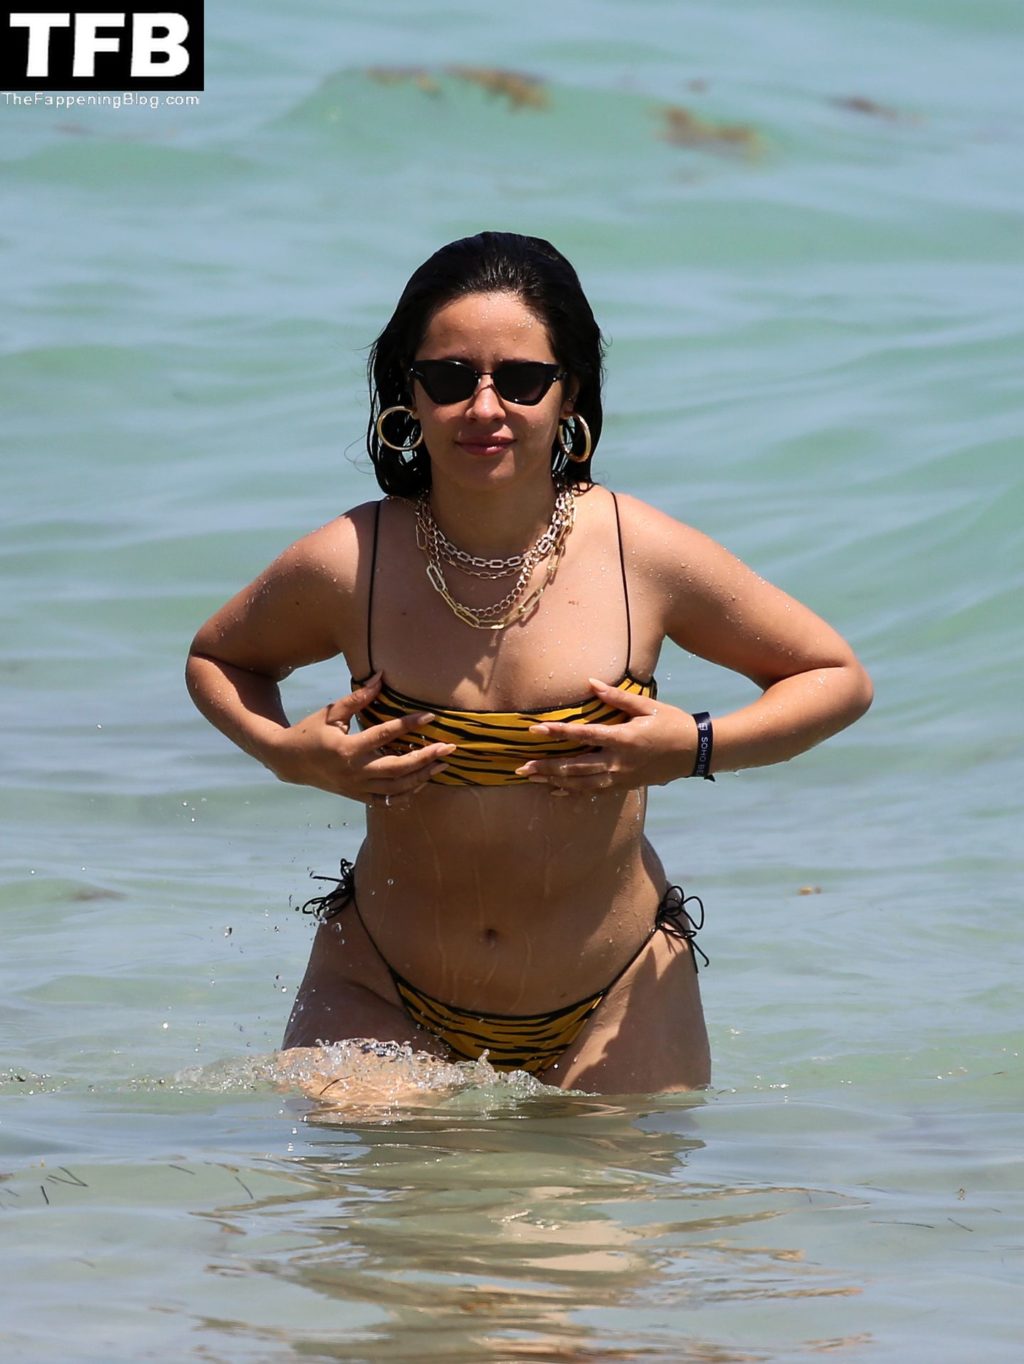 Camila Cabello Sexy The Fappening Blog 56 1024x1364 - Camila Cabello Displays Her Summer-Ready Body in Miami (108 Photos)